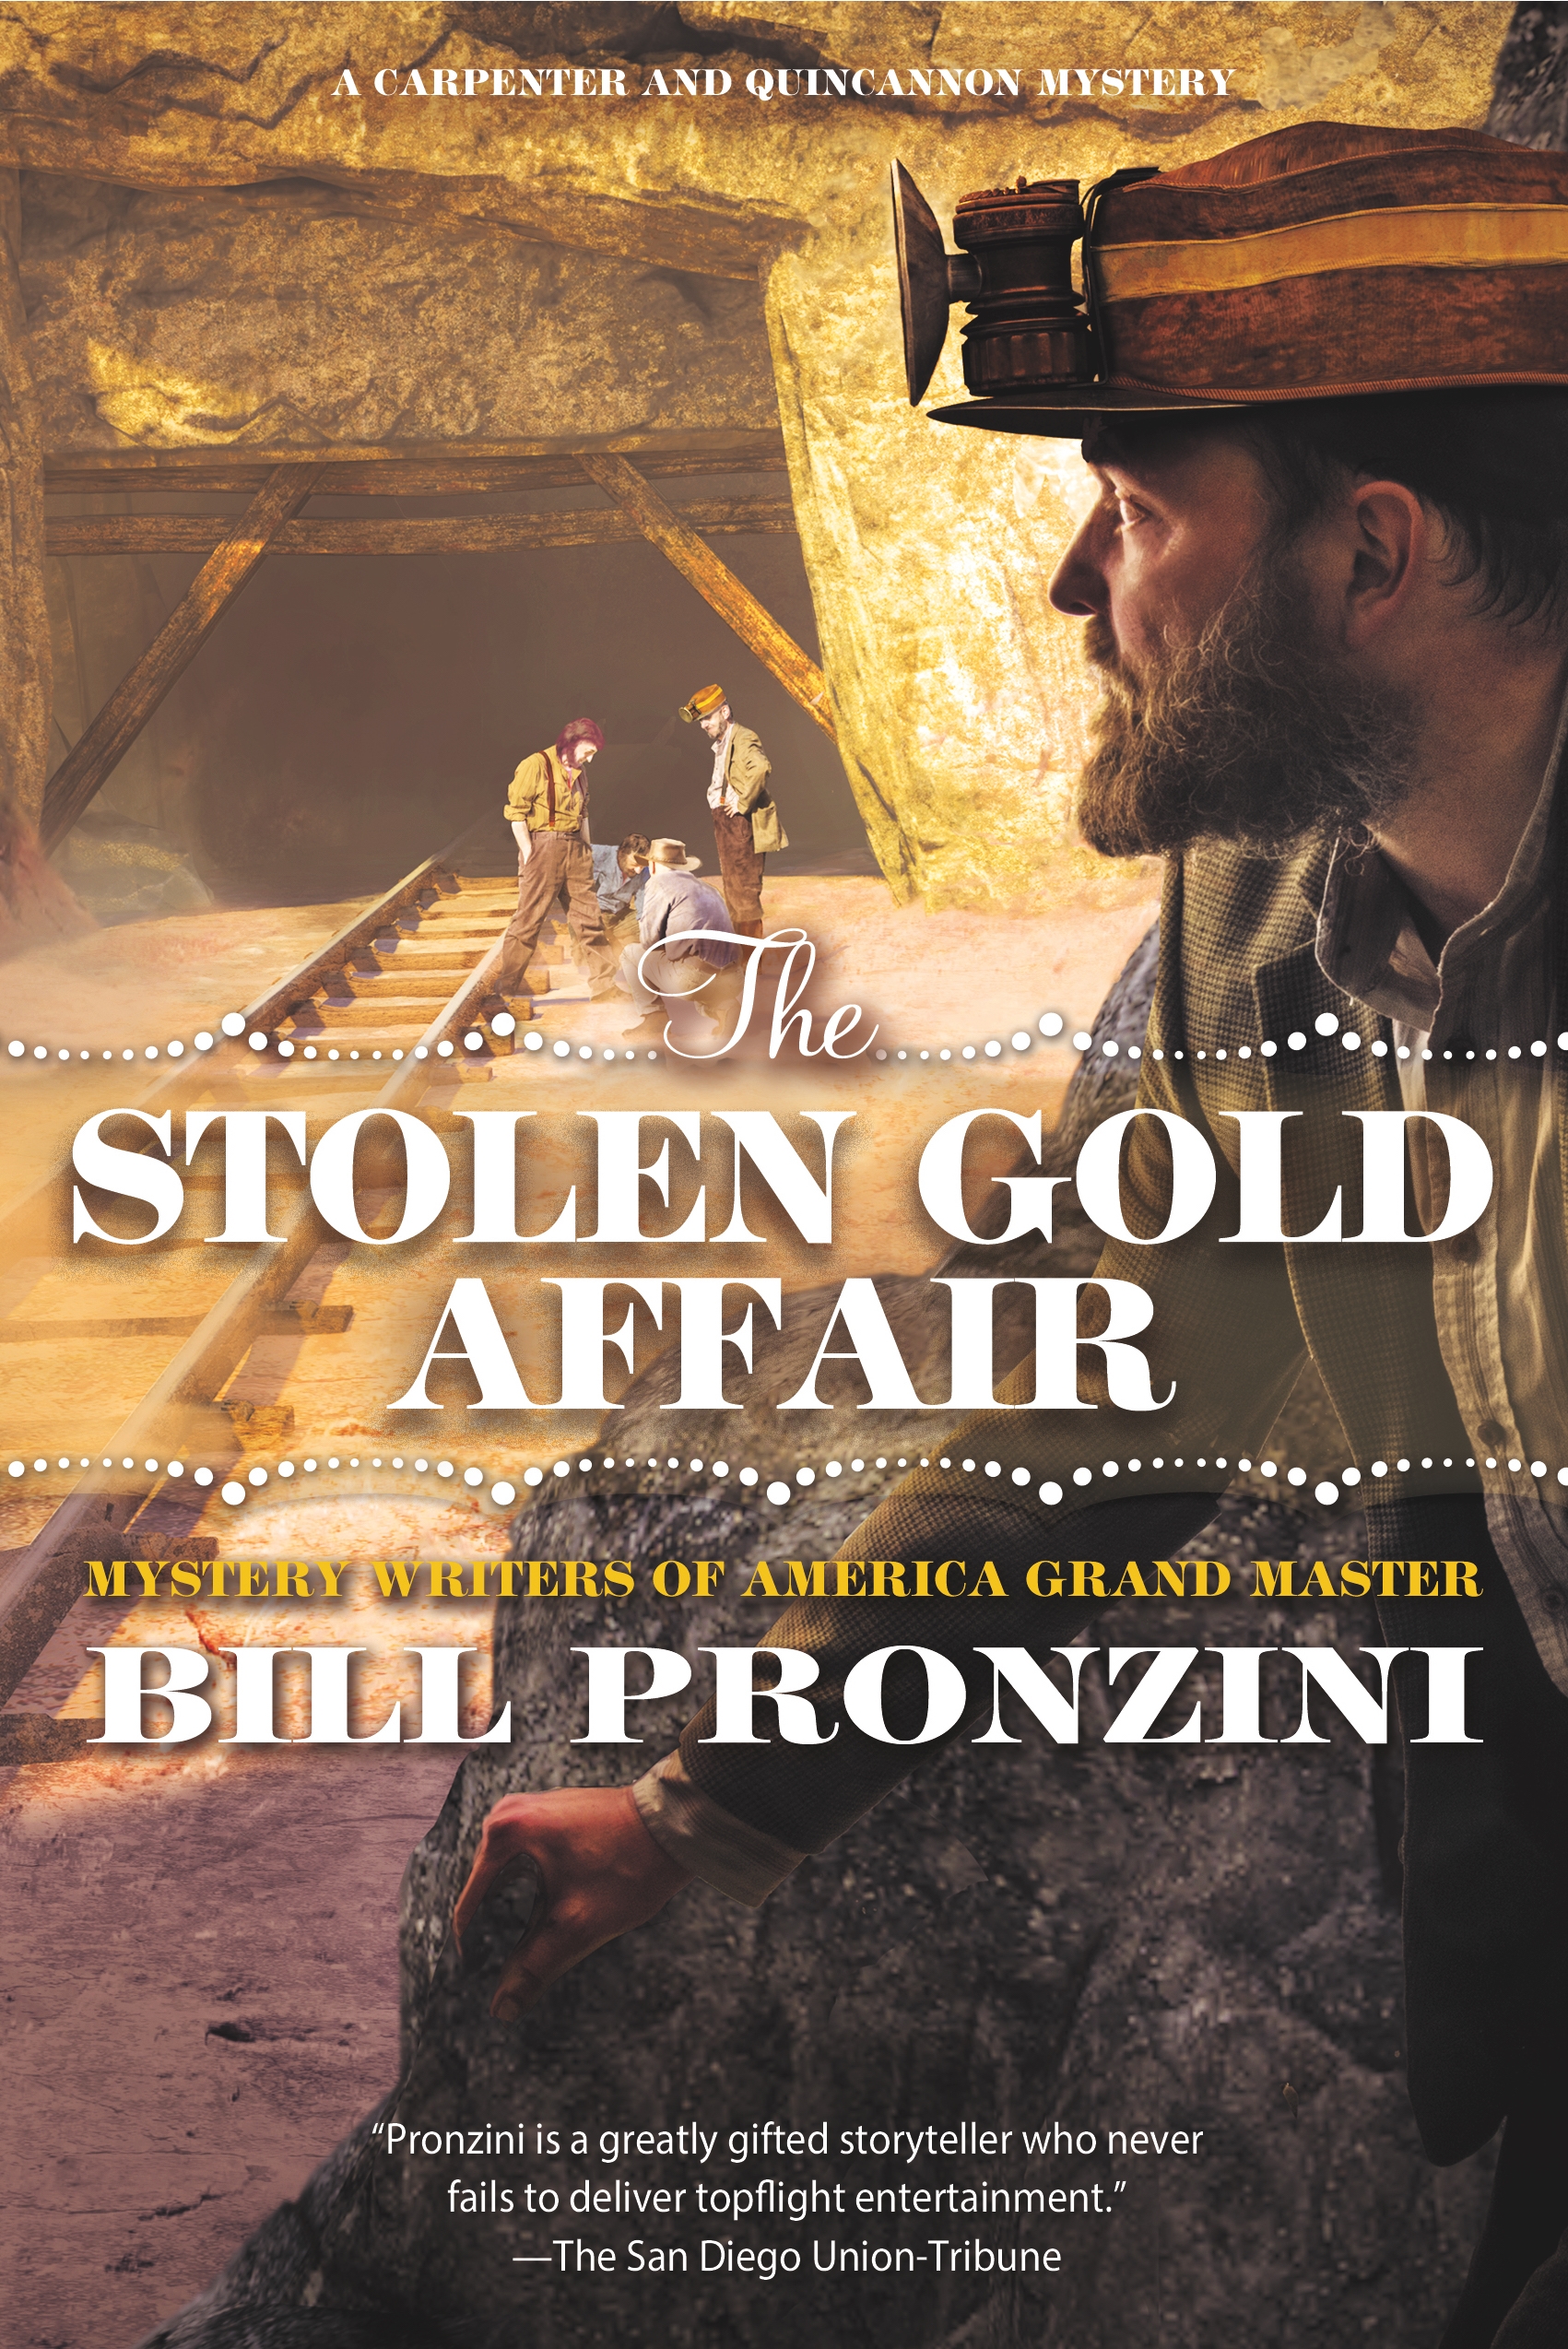 The Stolen Gold Affair : A Carpenter and Quincannon Mystery by Bill Pronzini